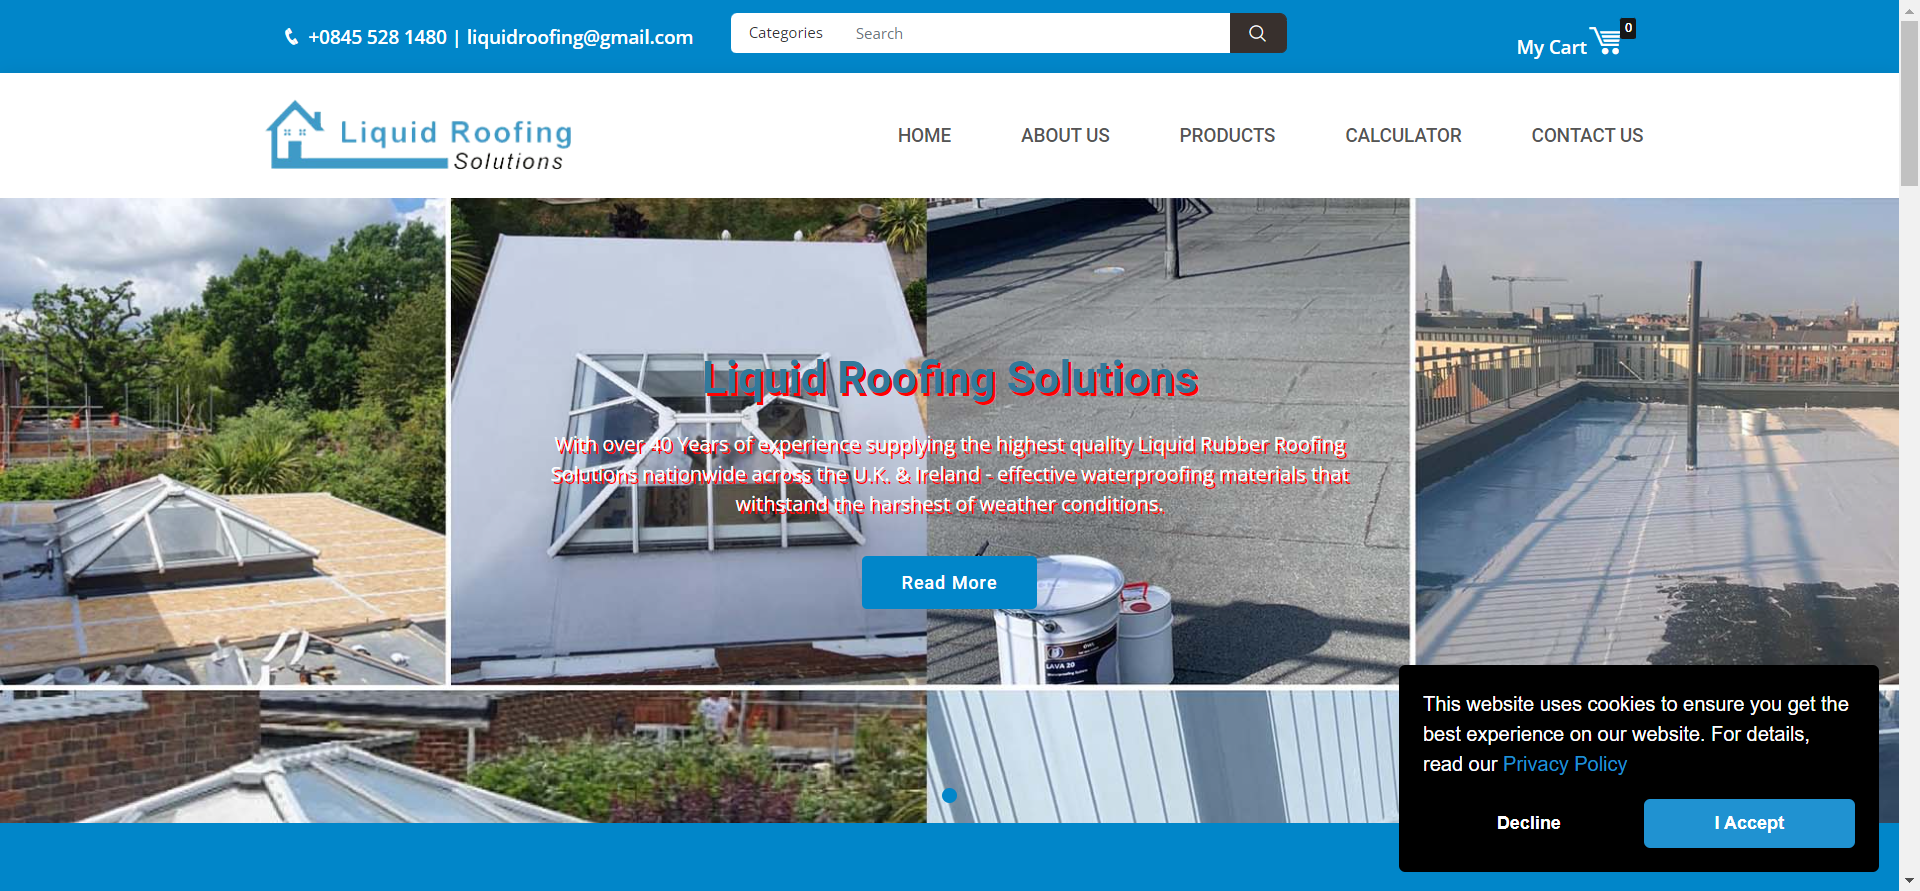 Liquid Roofing Solutions - E-Commerce Website